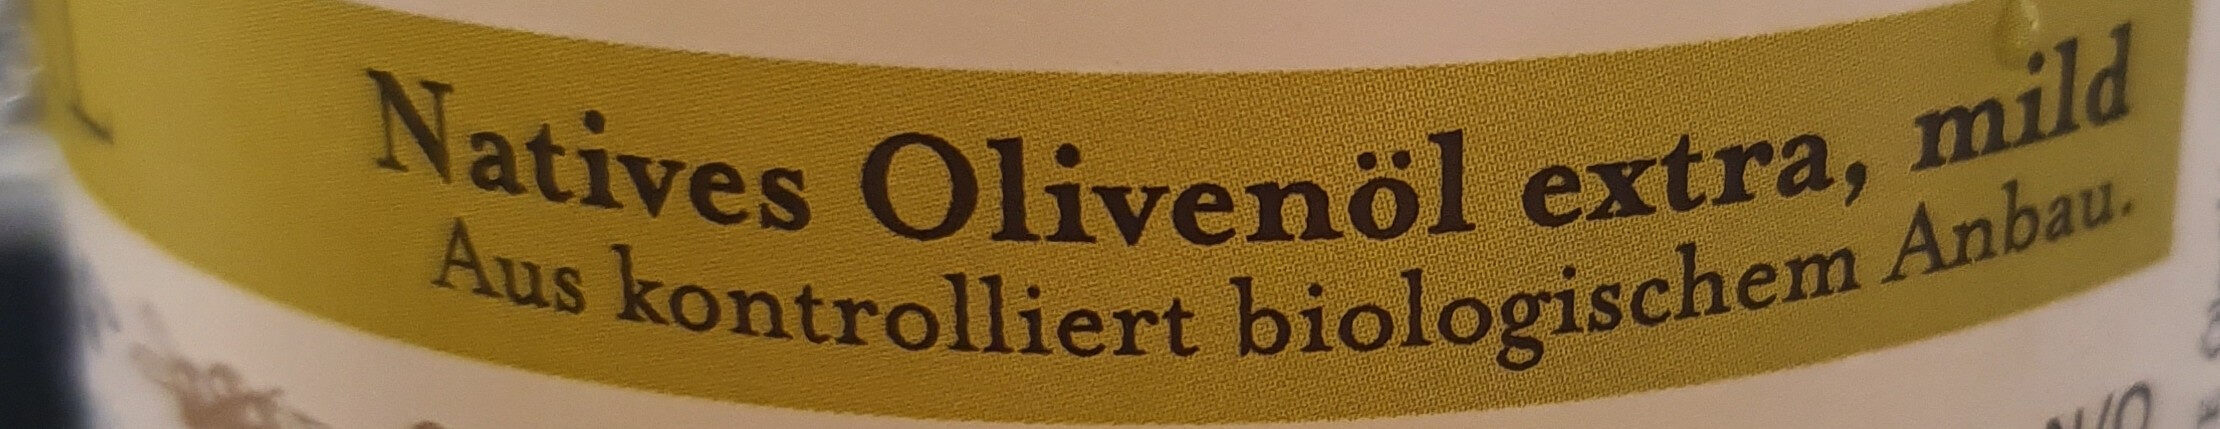 Oliven öl - Ingredientes - de